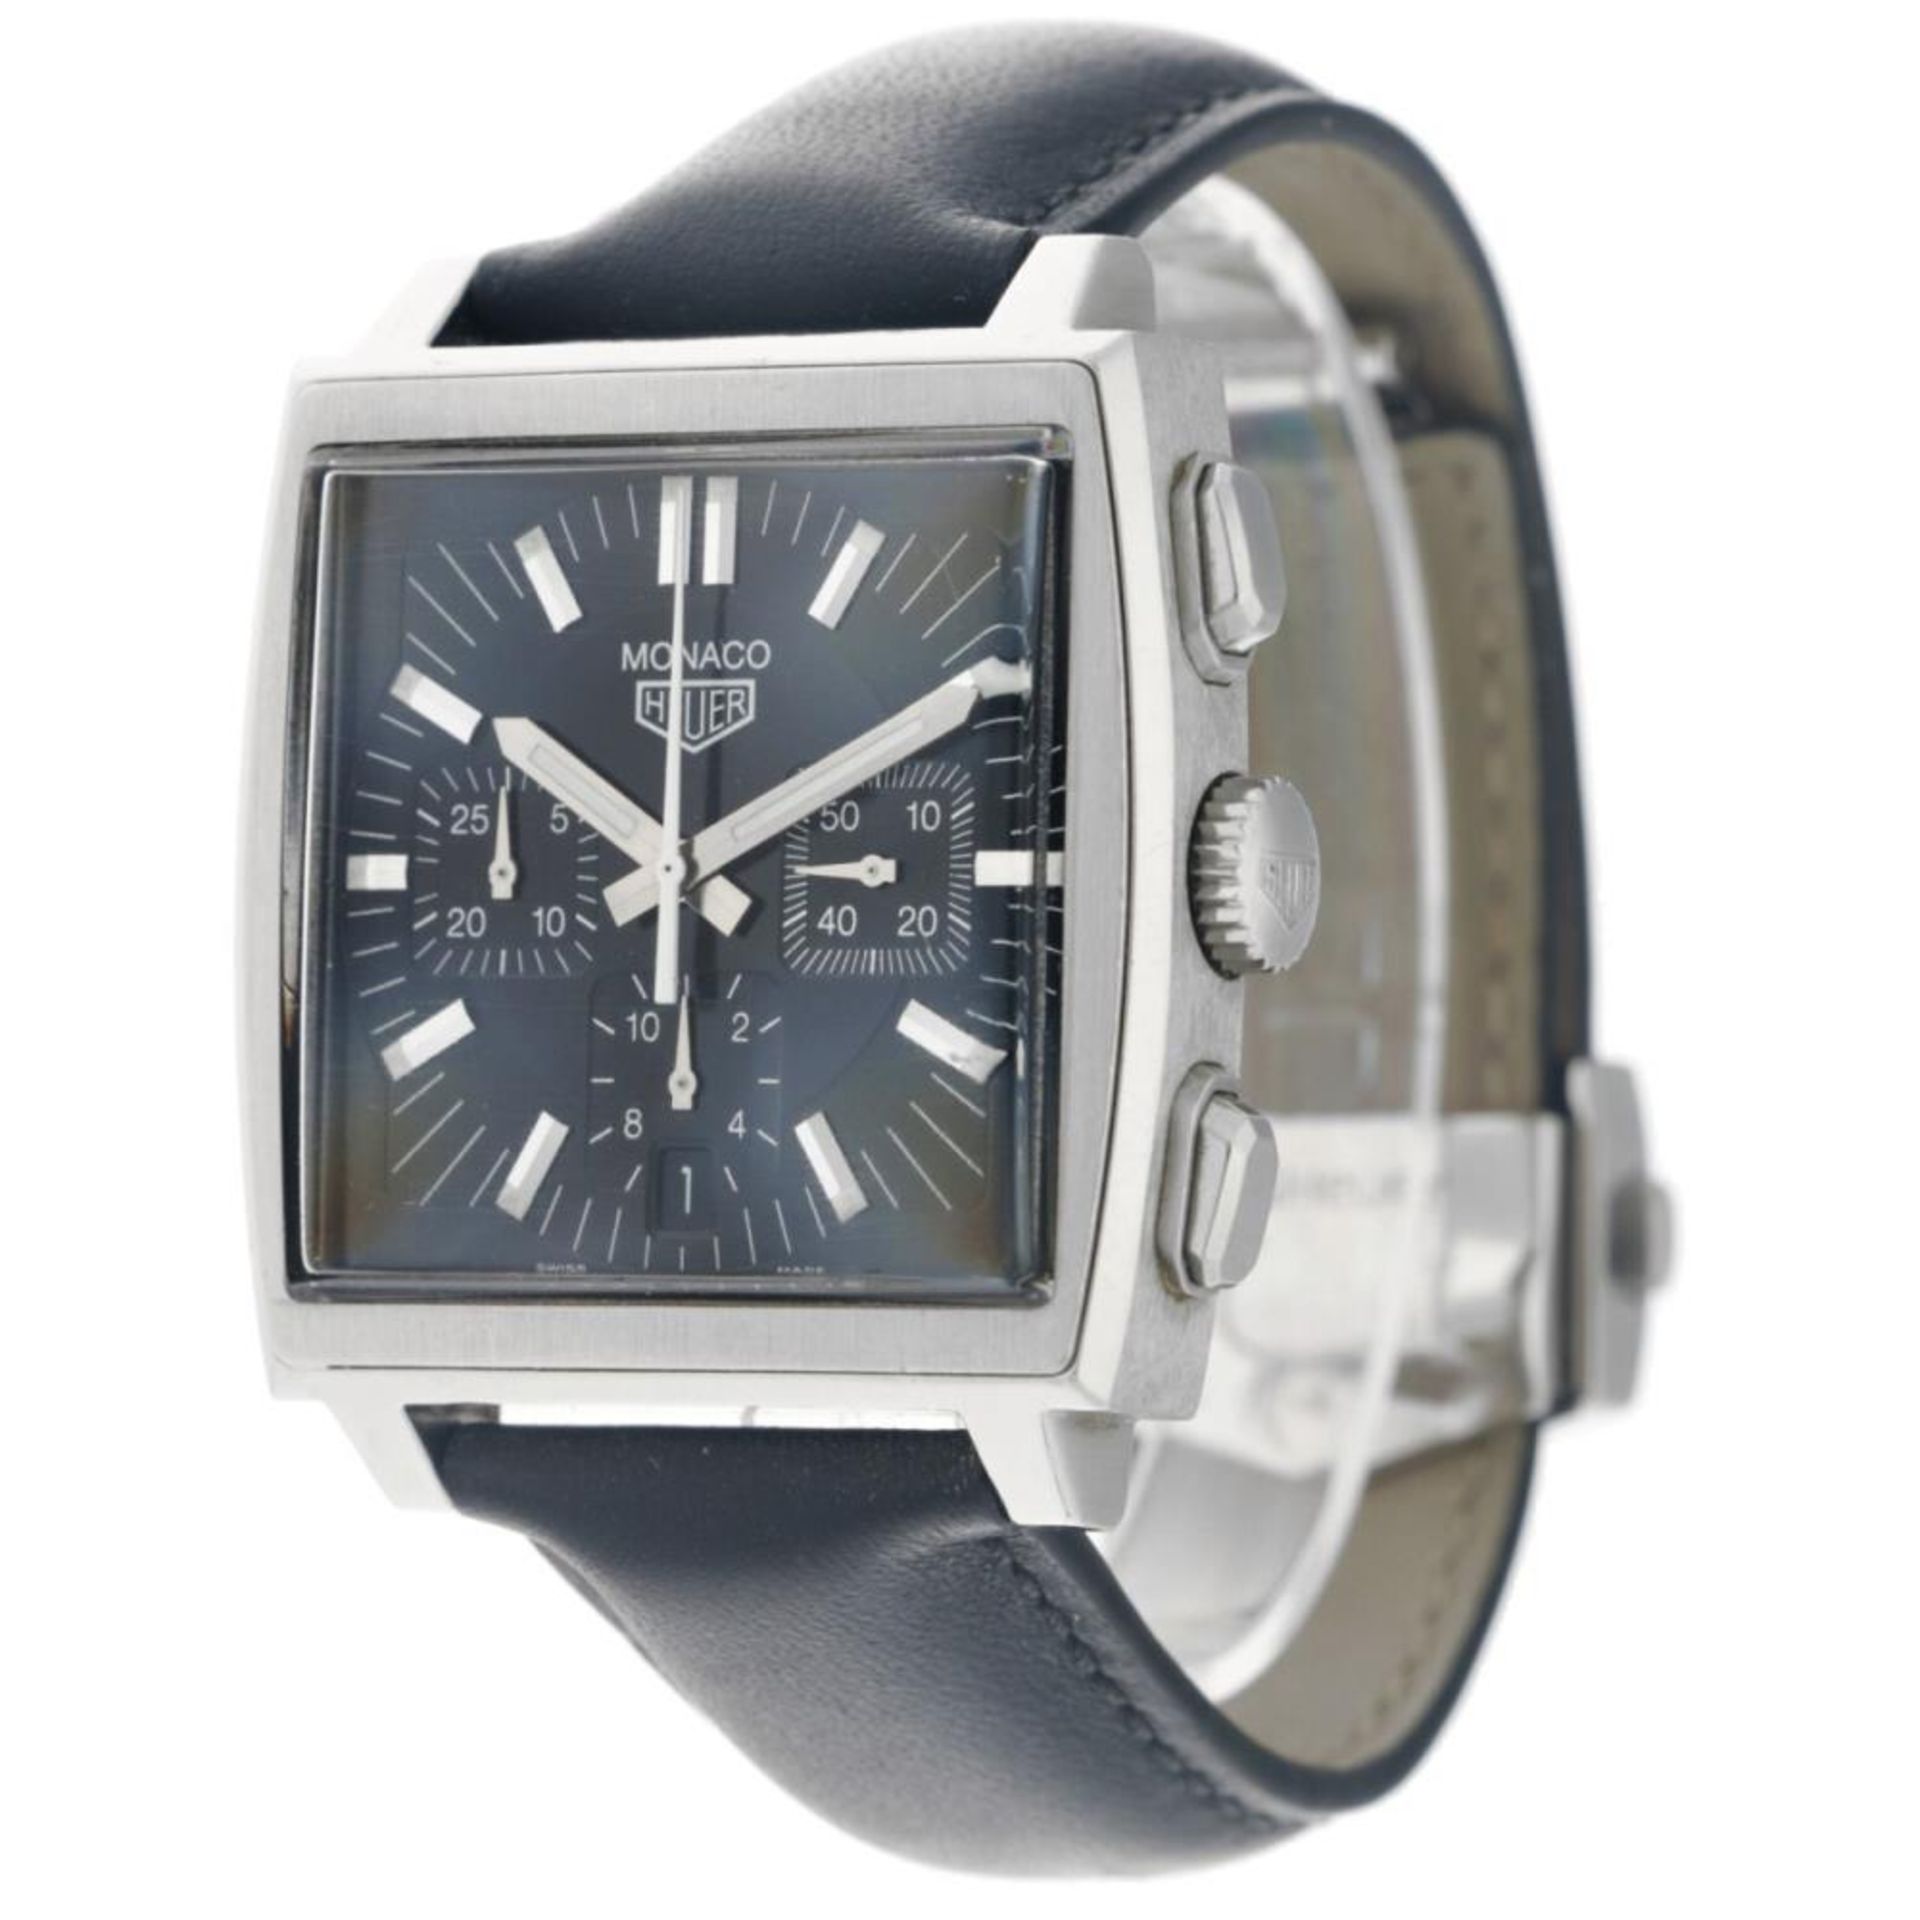 Tag Heuer Monaco CS2111 - Men's watch - approx. 2000. - Image 2 of 6